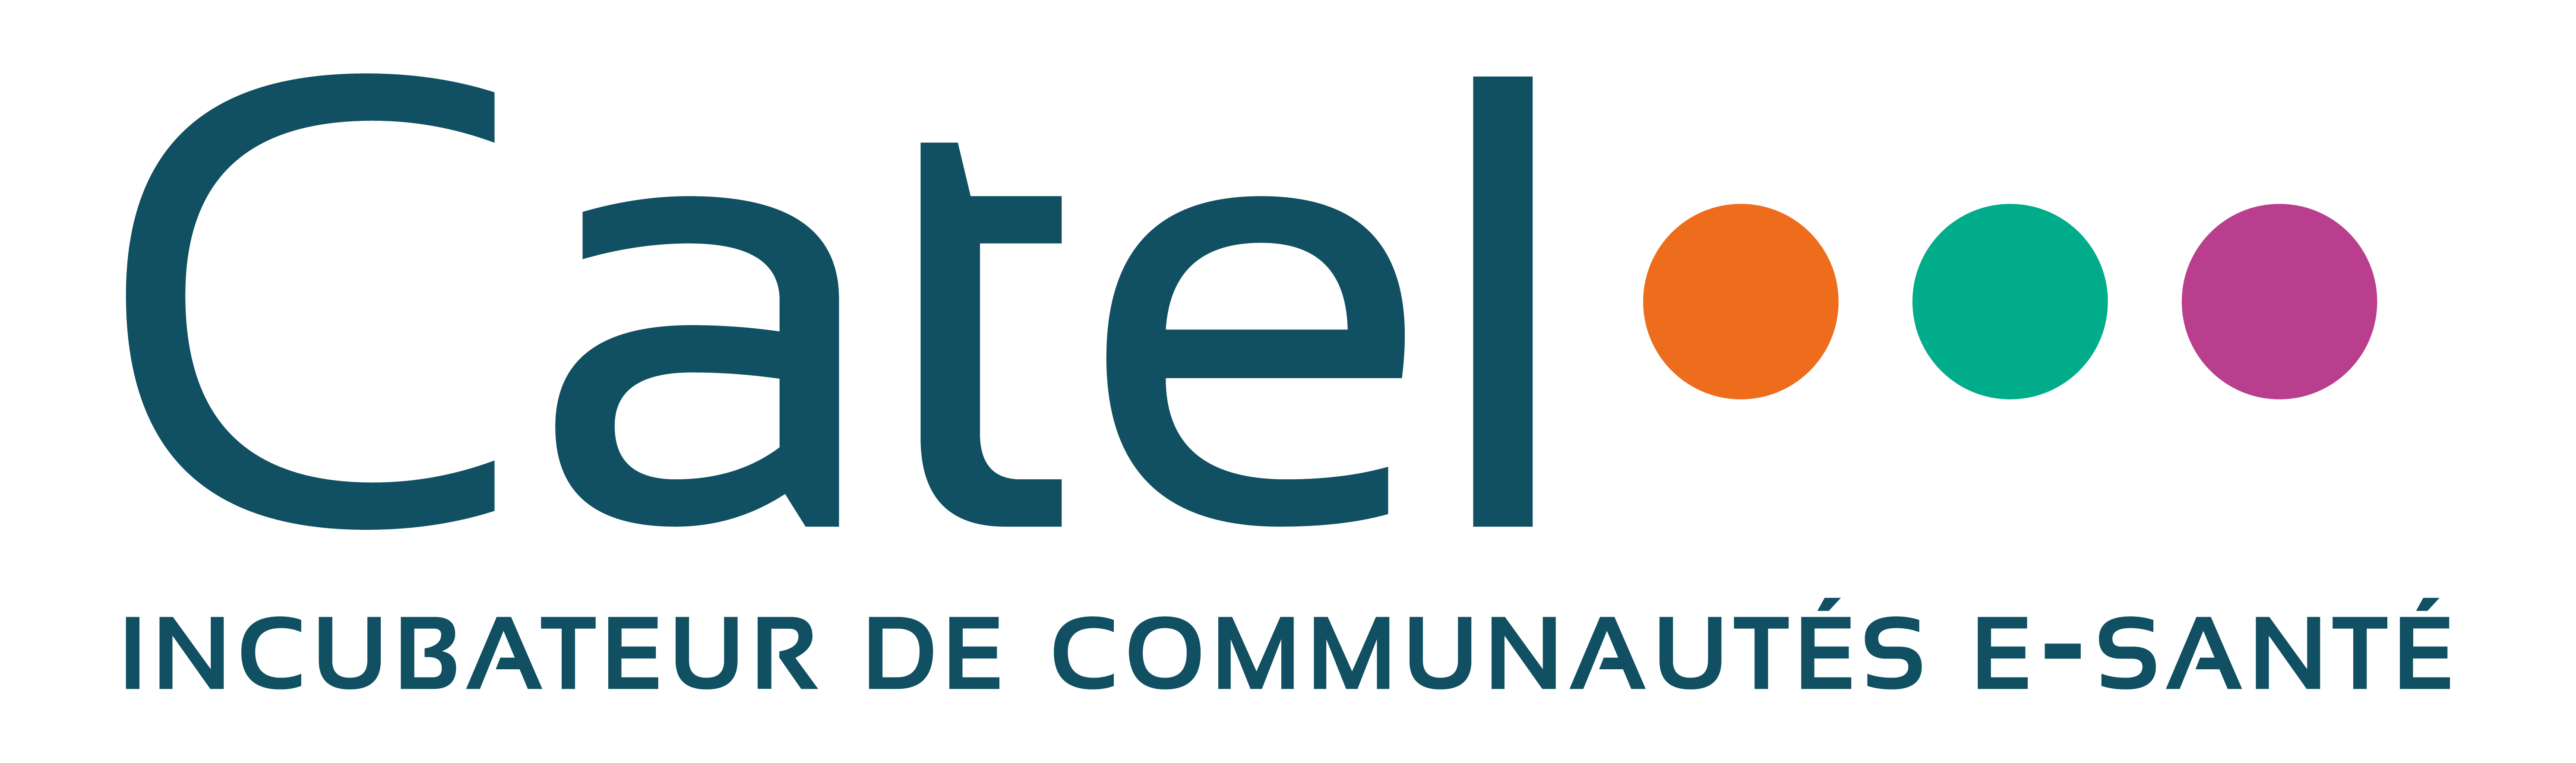 Logo Catel